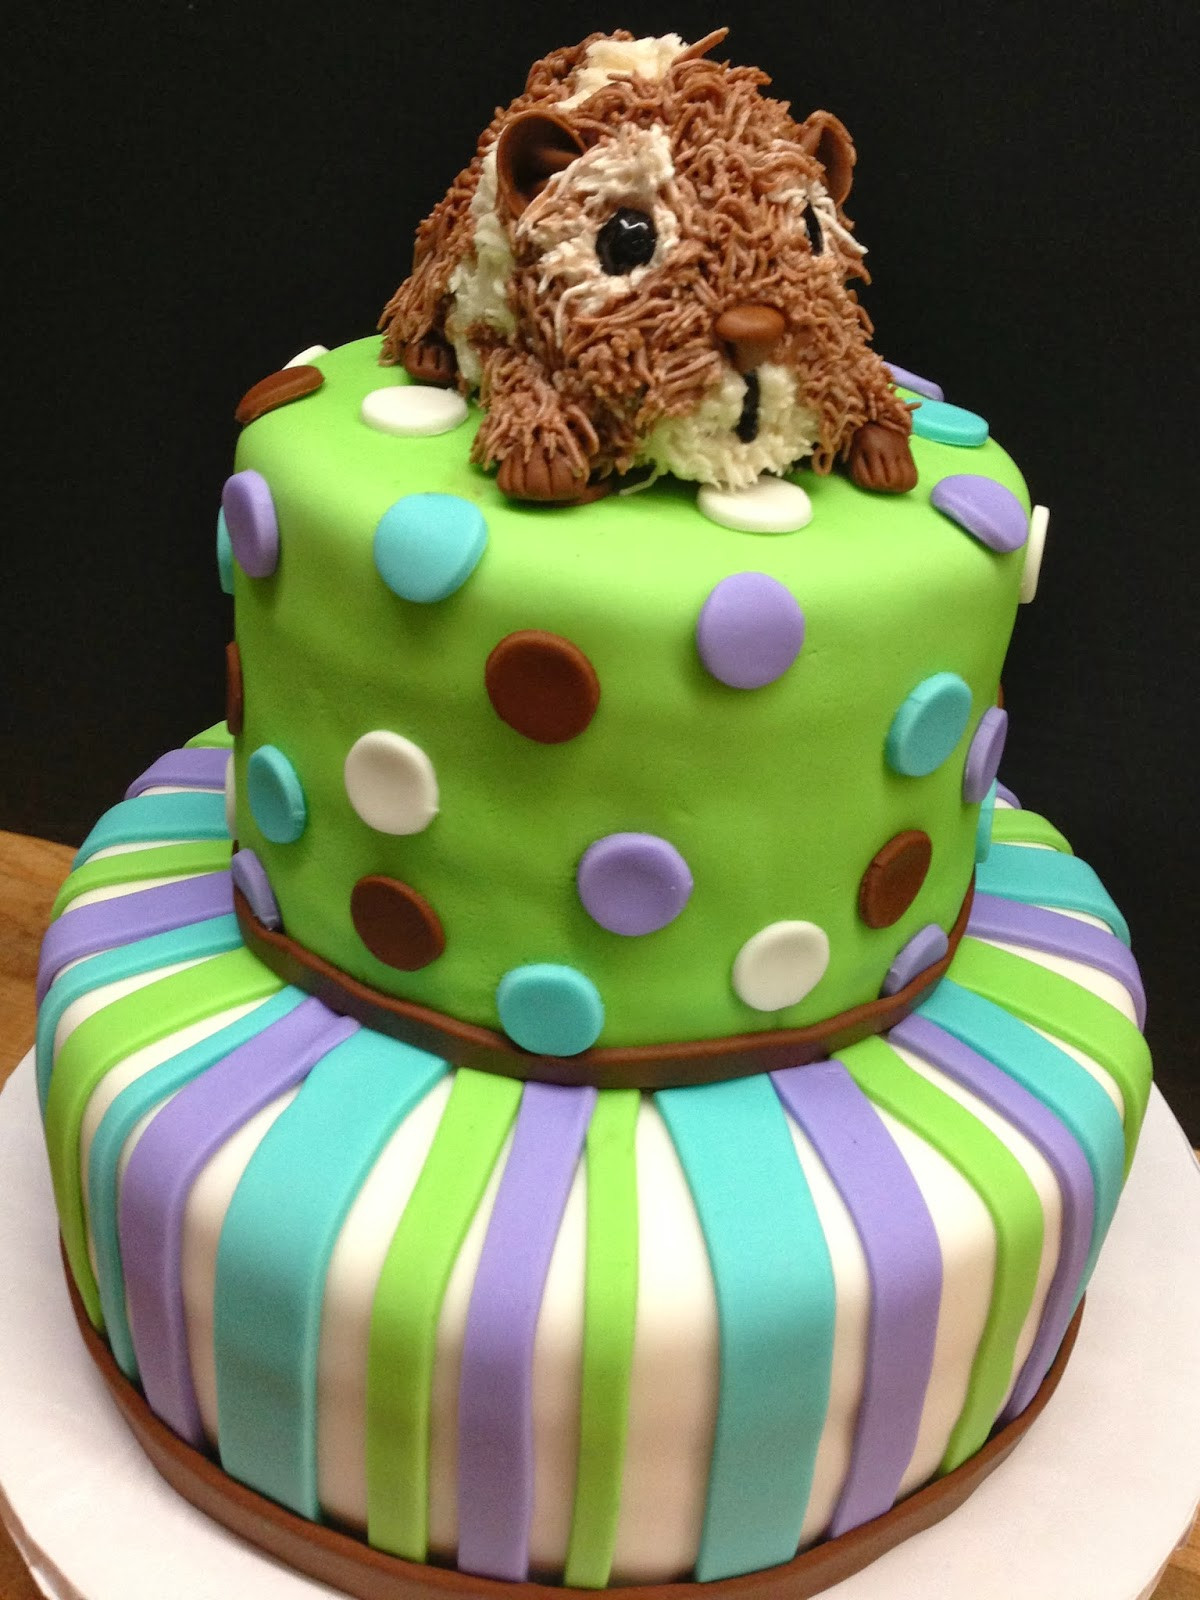 Best ideas about Pigs Birthday Cake
. Save or Pin Plumeria Cake Studio Guinea Pig Birthday Cake Now.